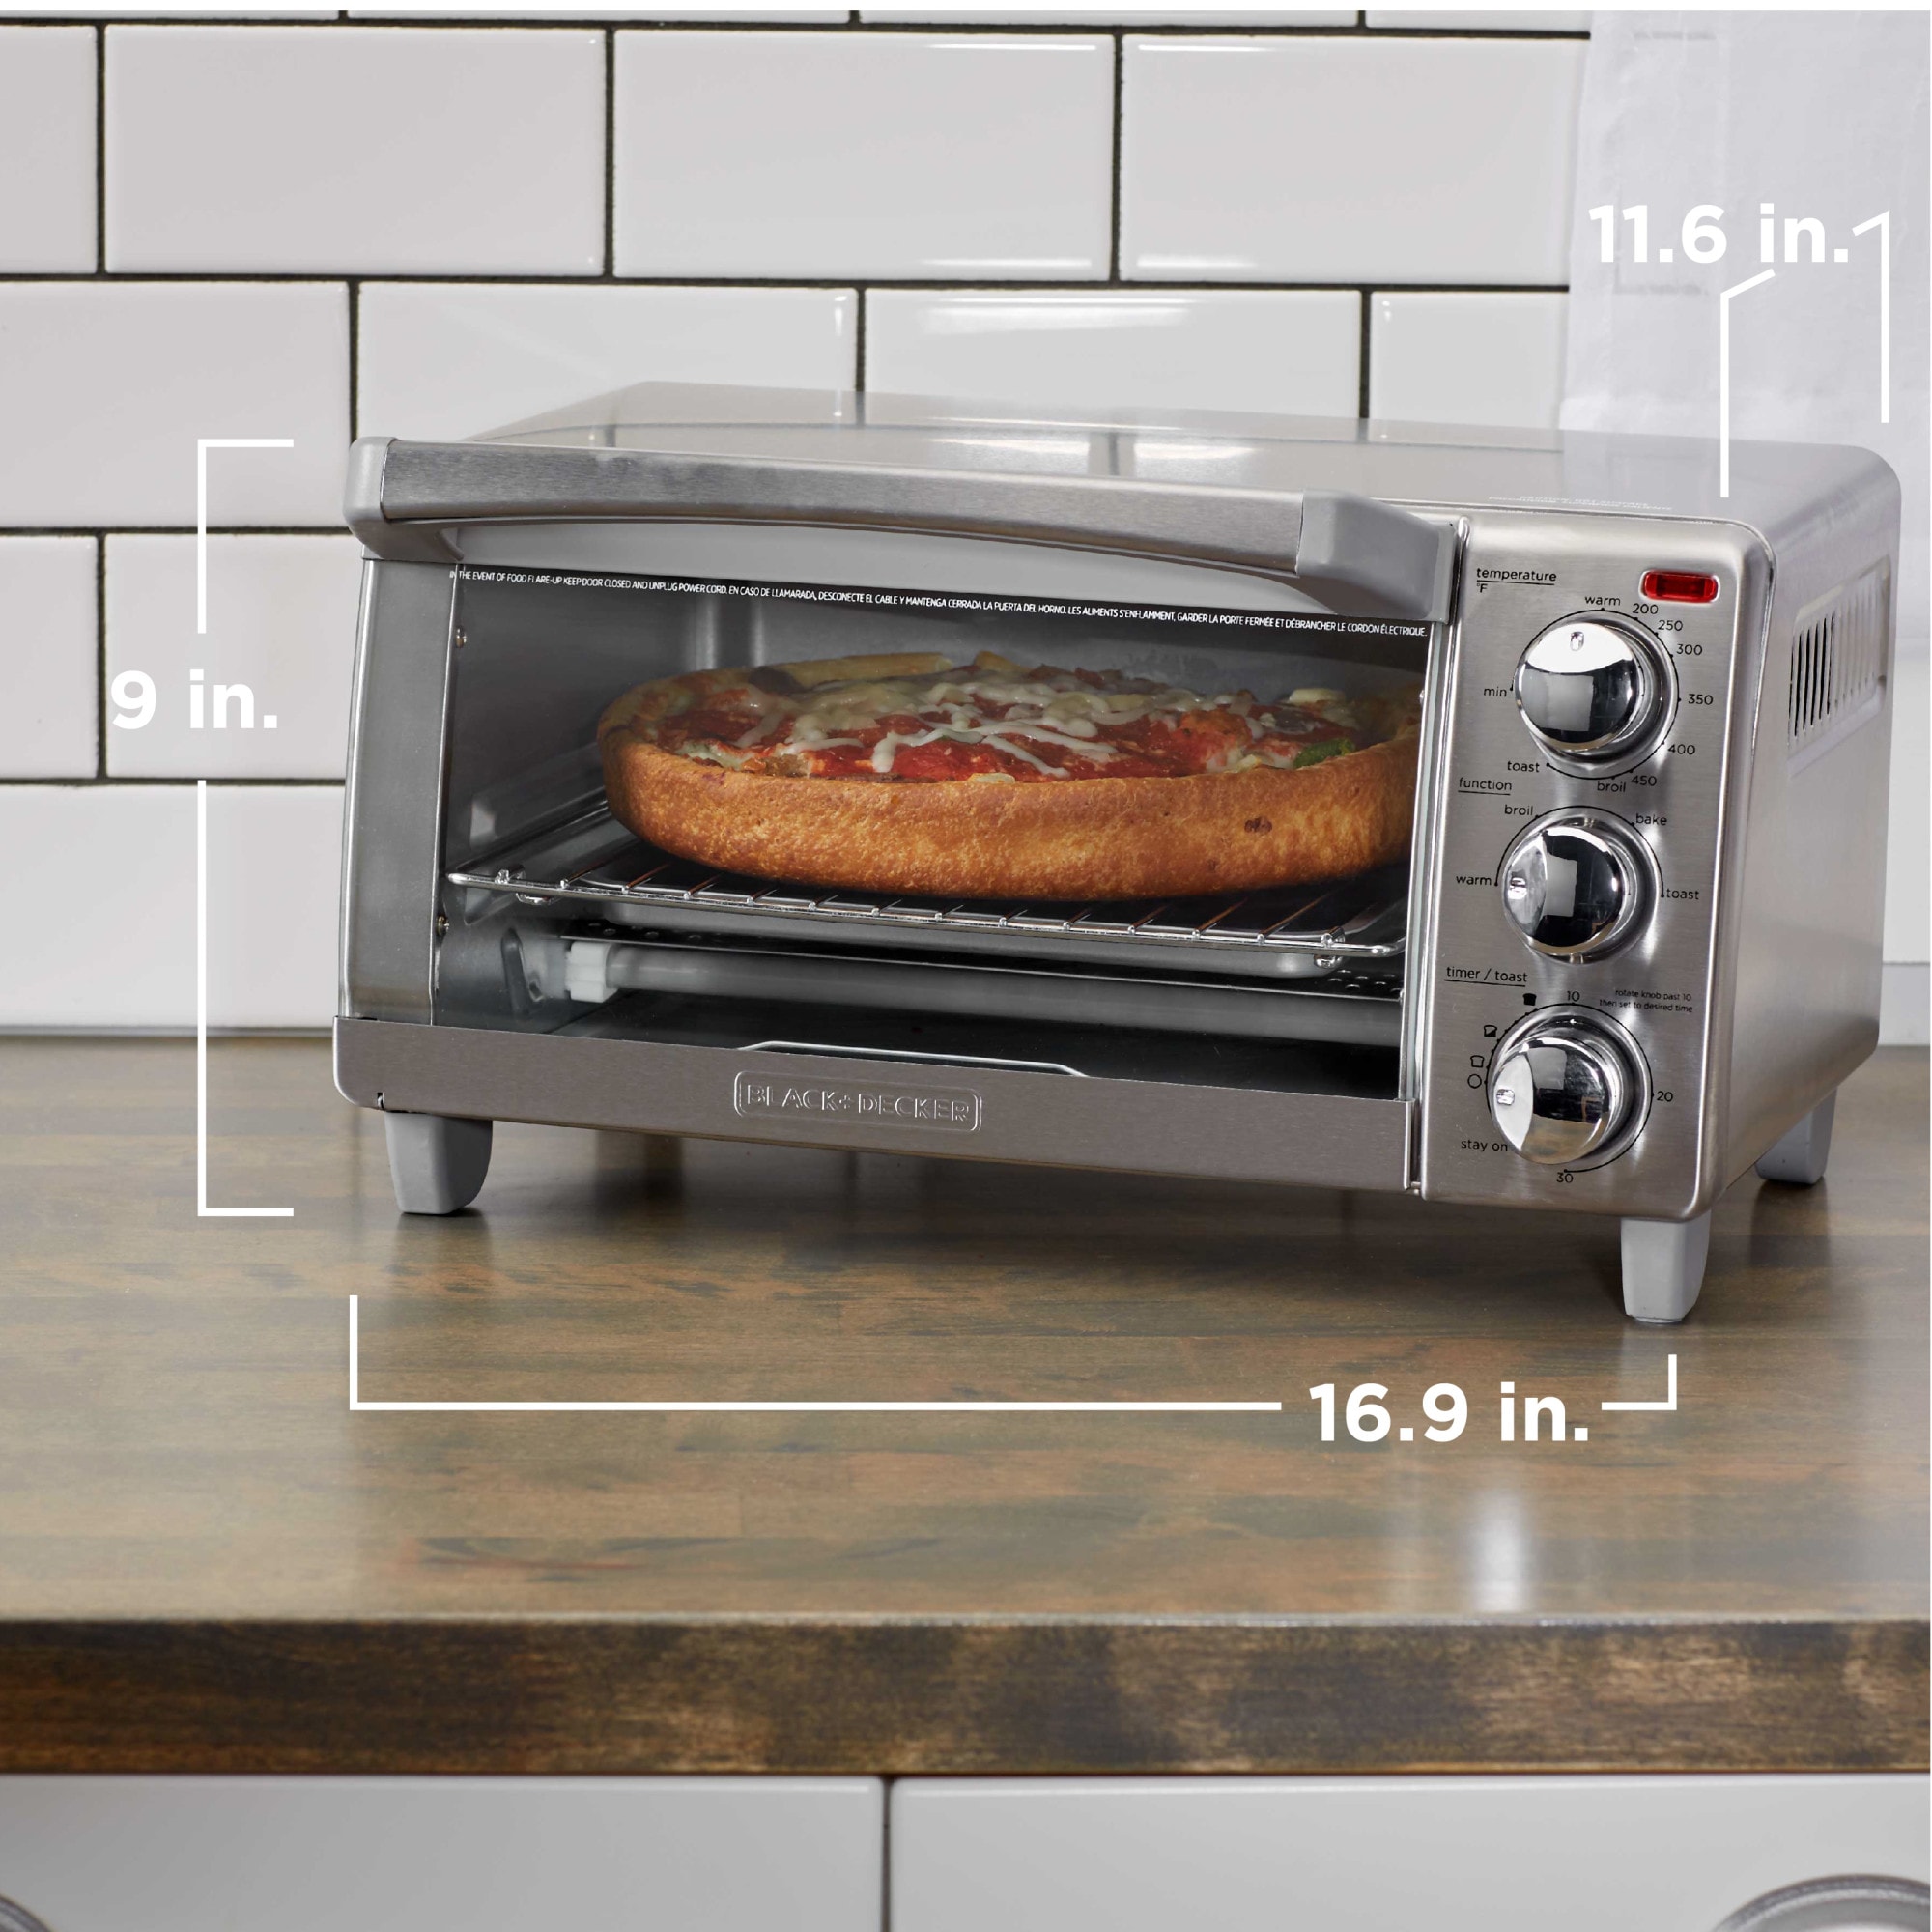 Black & Decker™ 4-Slice Toaster Oven fits 9 Pizza, Grey